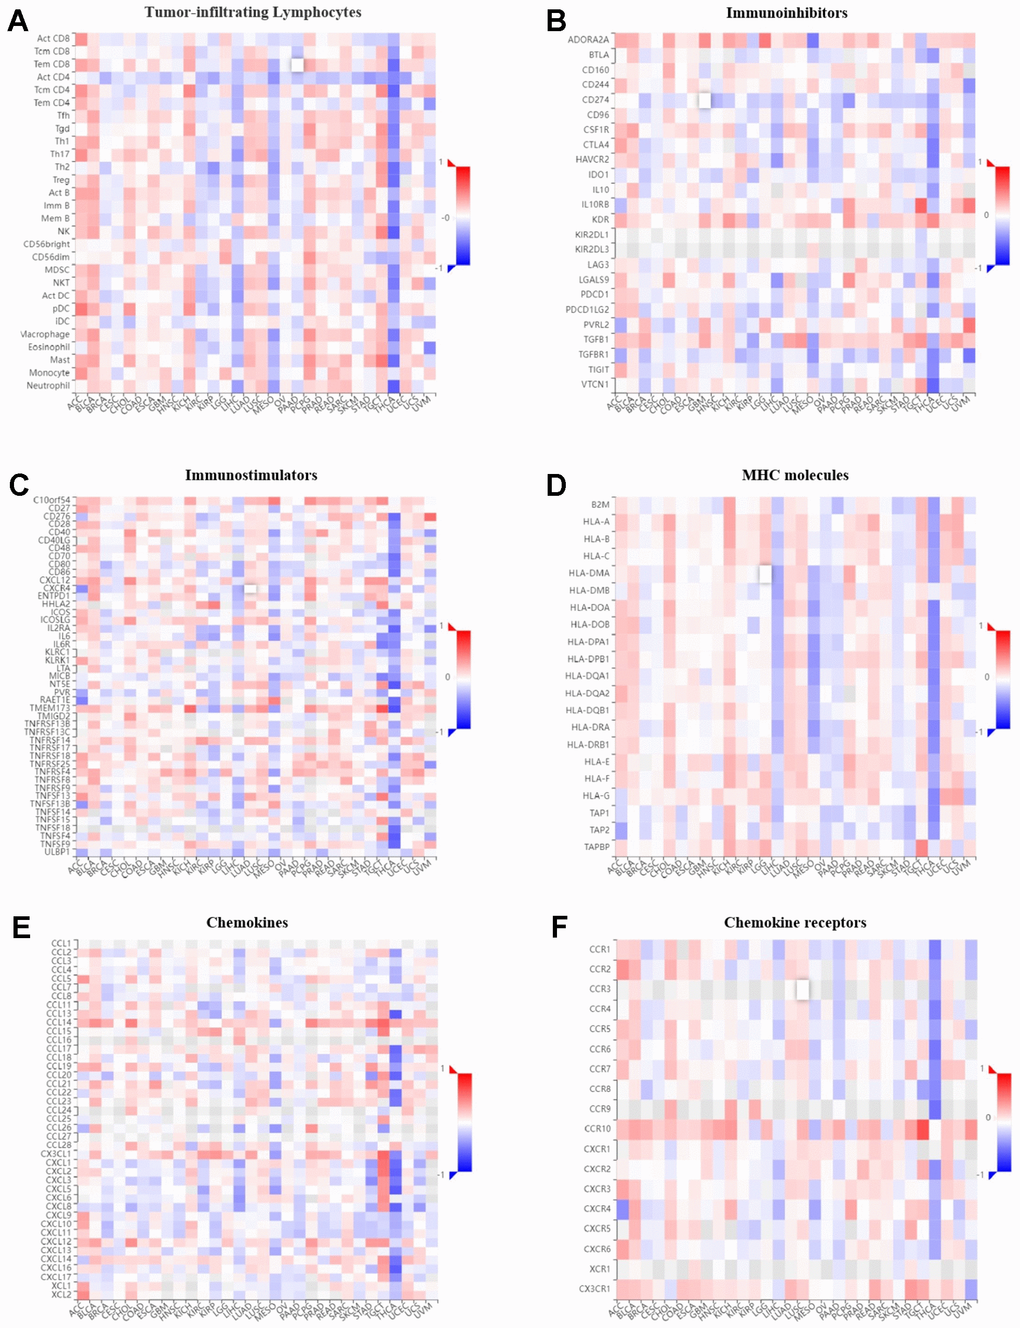 Correlation of GPER1 with TILs and immunoregulation-related genes in pan-cancers. Correlations between GPER1 and (A) TILs, (B) immunoinhibitors, (C) immunostimulators, (D) MHC molecules, (E) Chemokines, (F) Chemokine receptors.